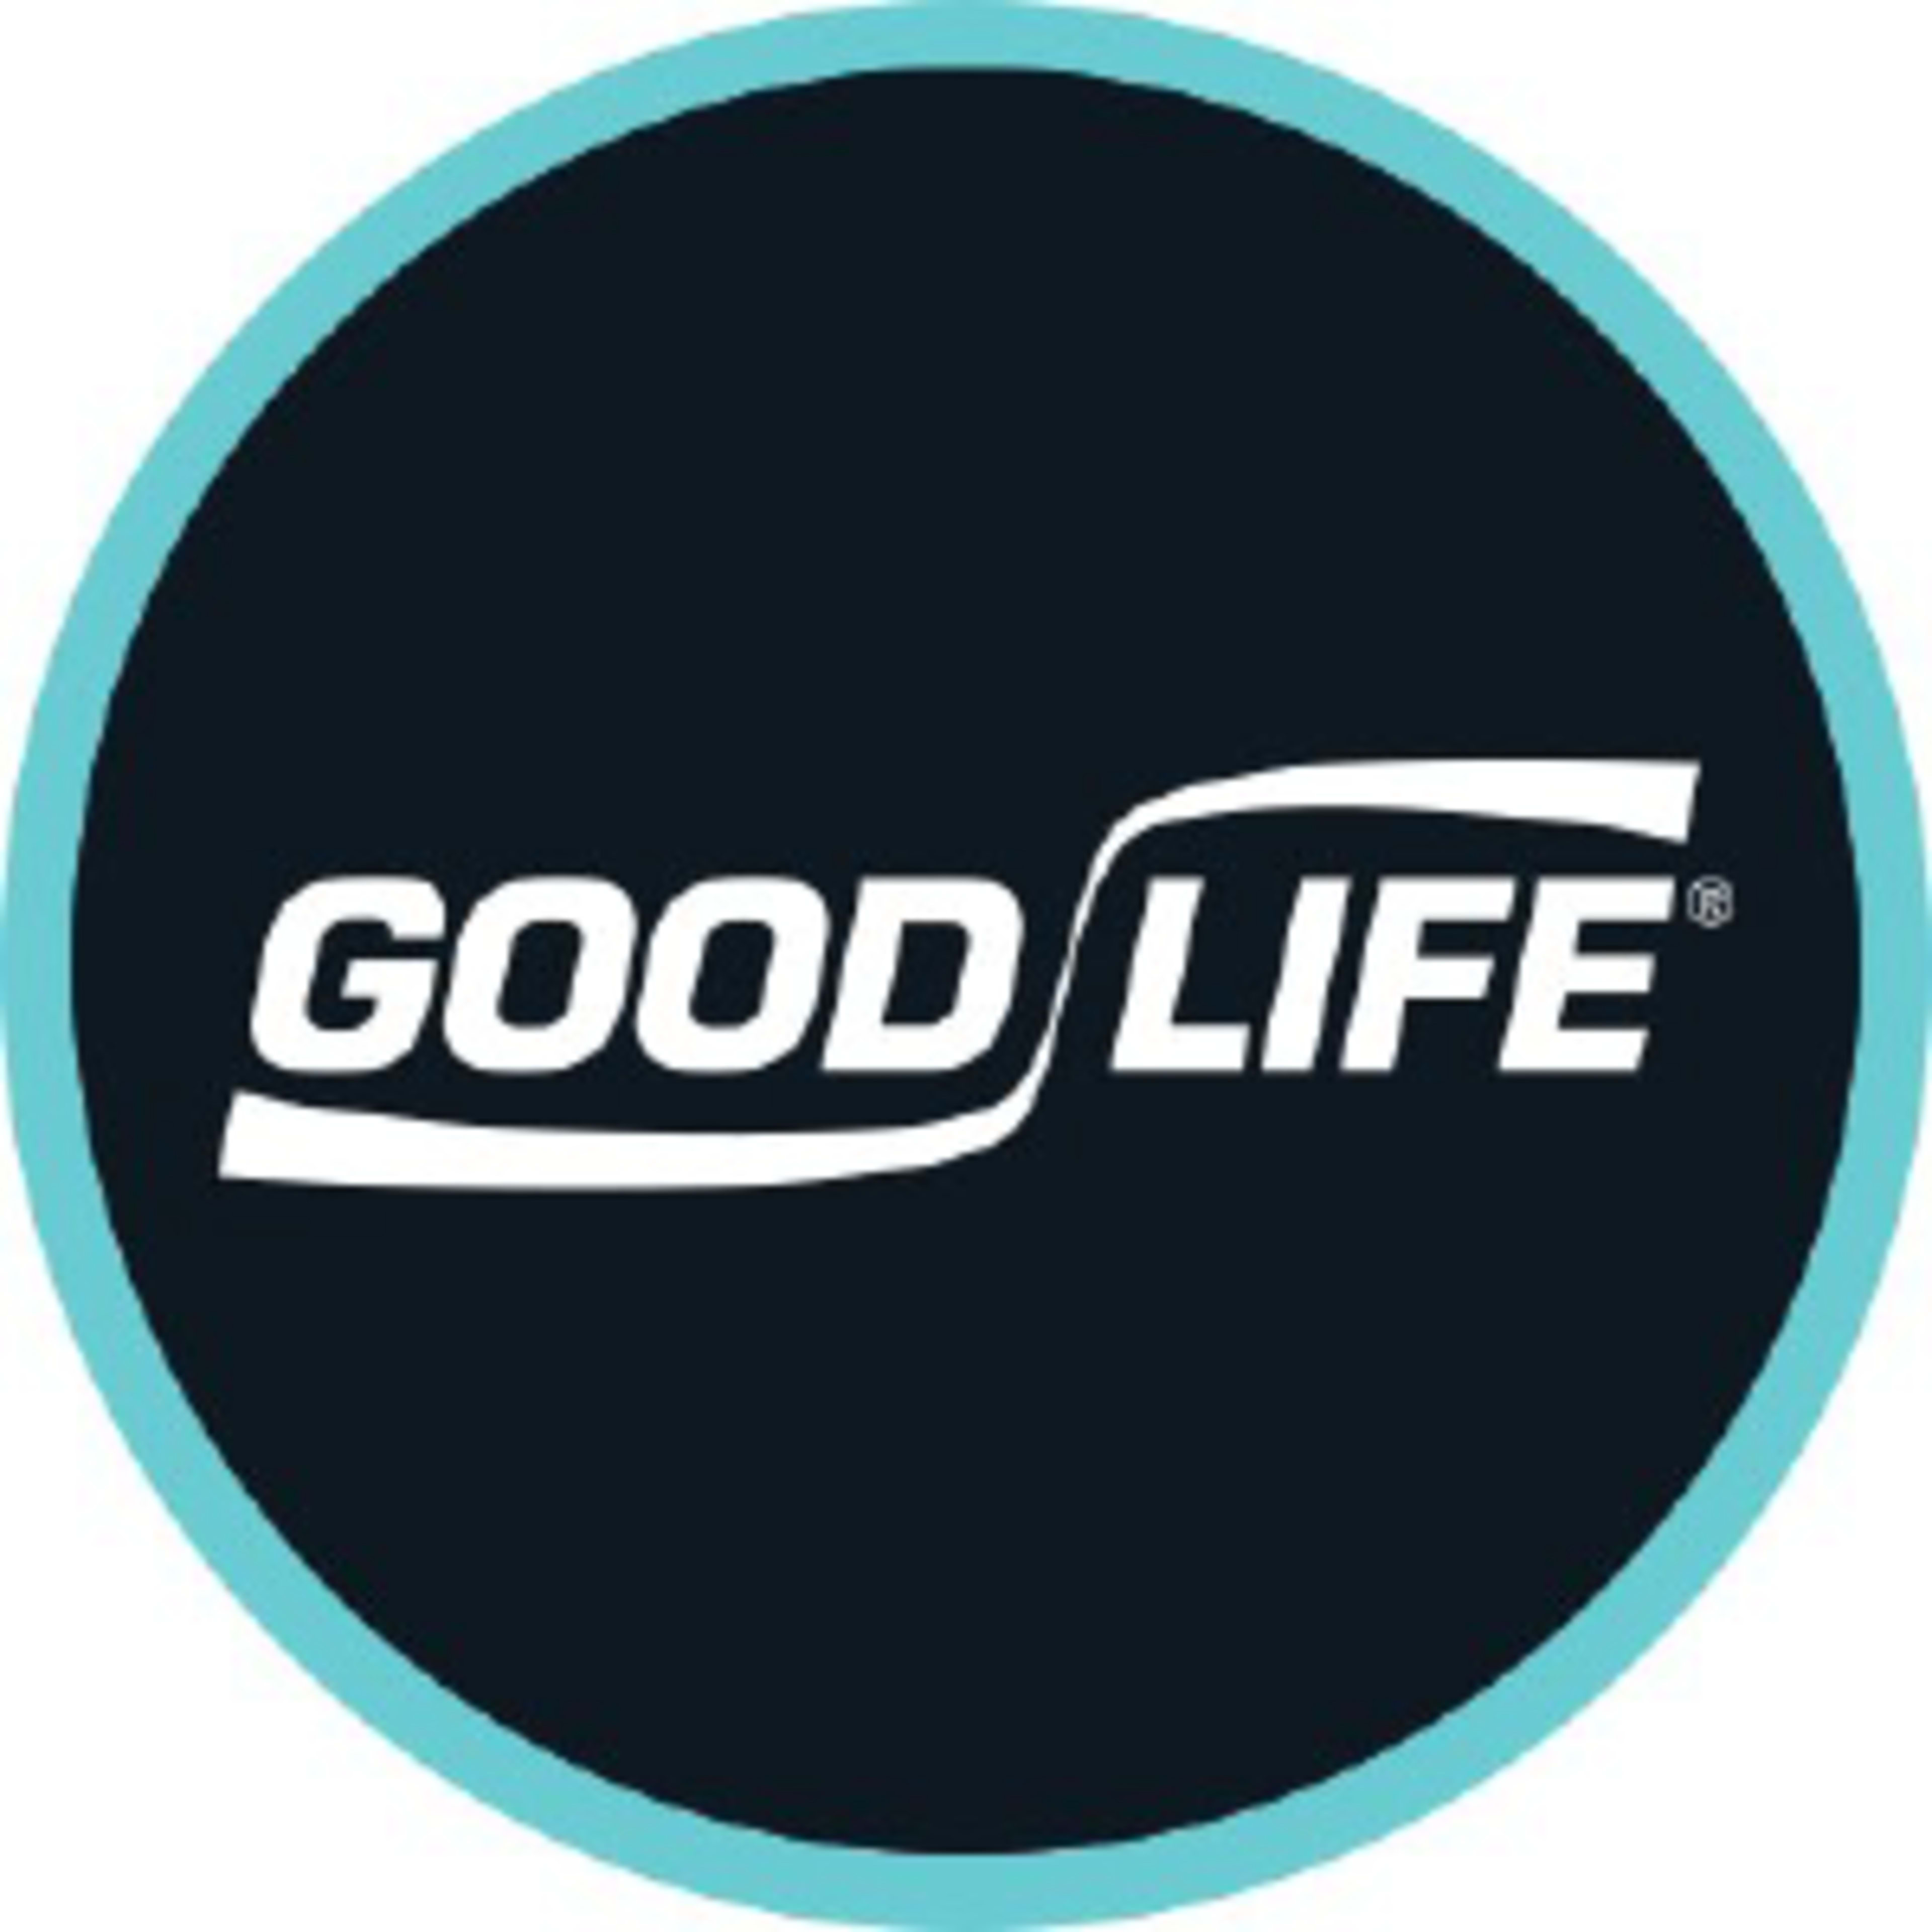 Good Life, Inc. Code